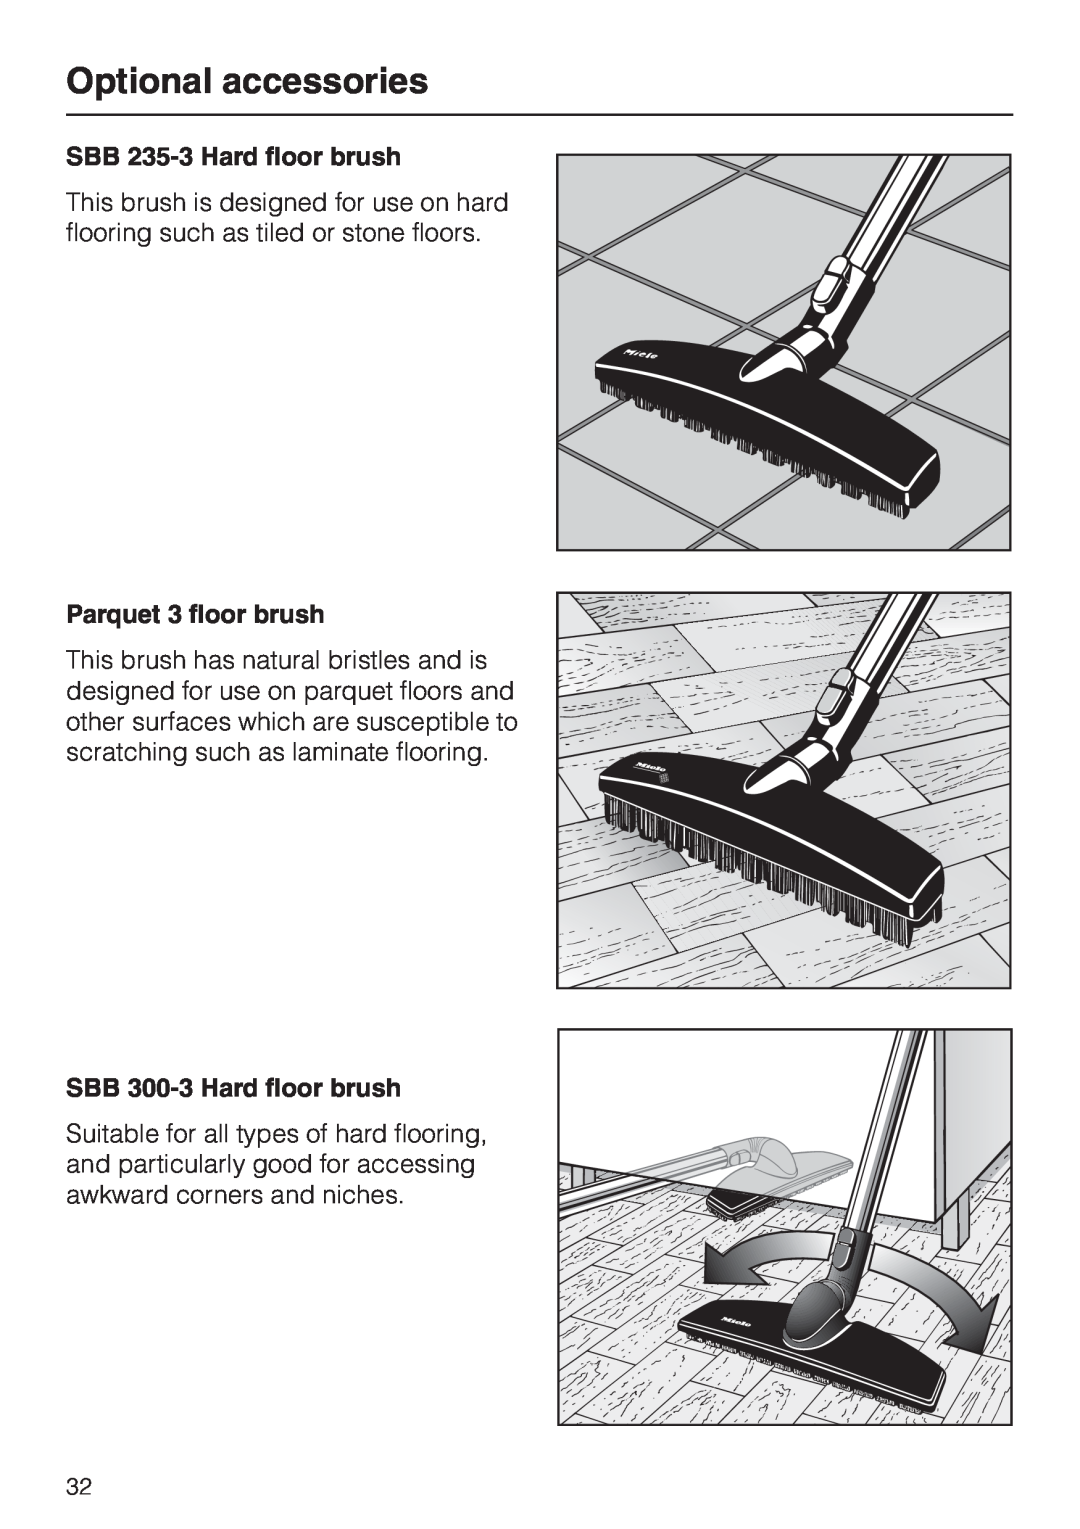 Miele S 5980 manual Optional accessories, SBB 235-3Hard floor brush, Parquet 3 floor brush, SBB 300-3Hard floor brush 